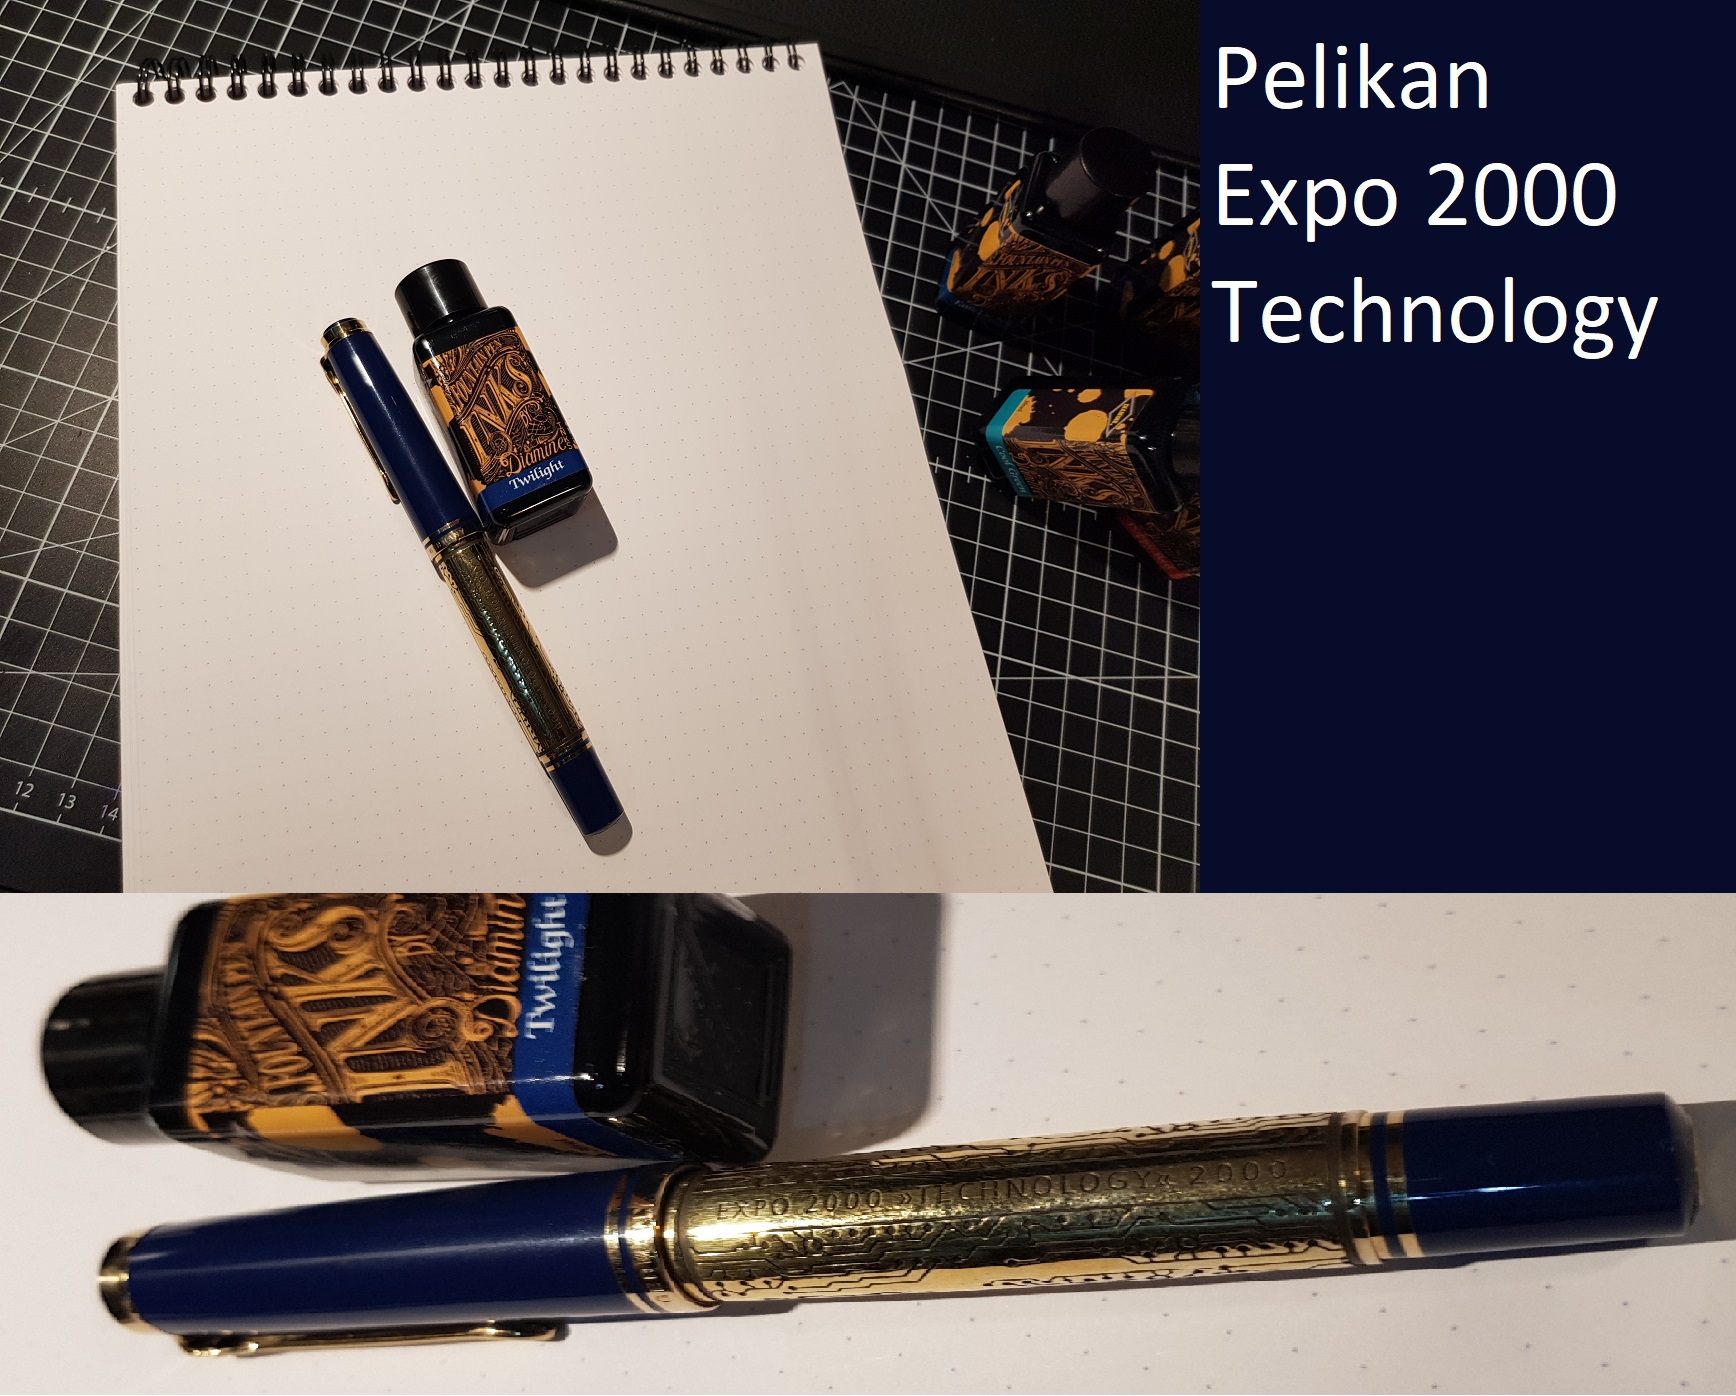 Pelikan Expo 2000 Technology 2.jpg